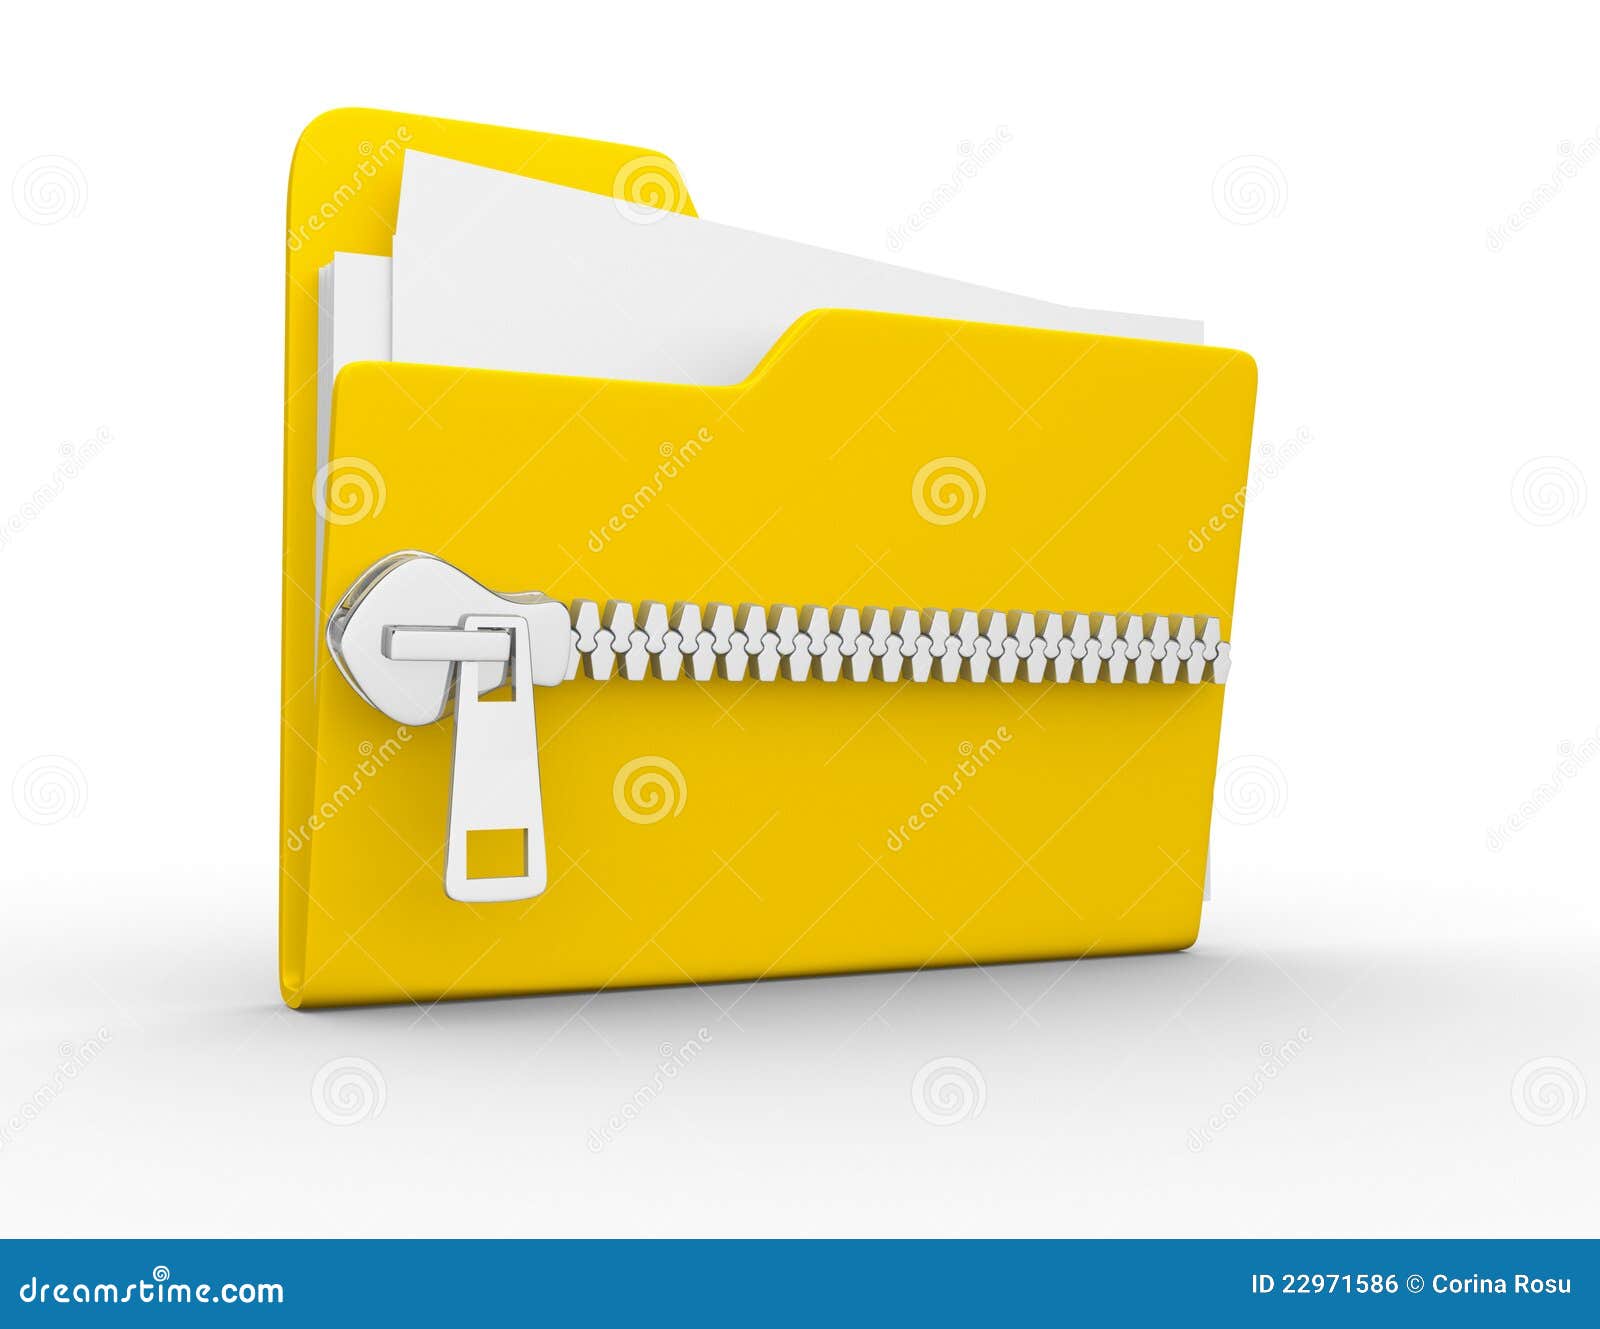 Folder stock illustration. Illustration of closed, protect - 22971586